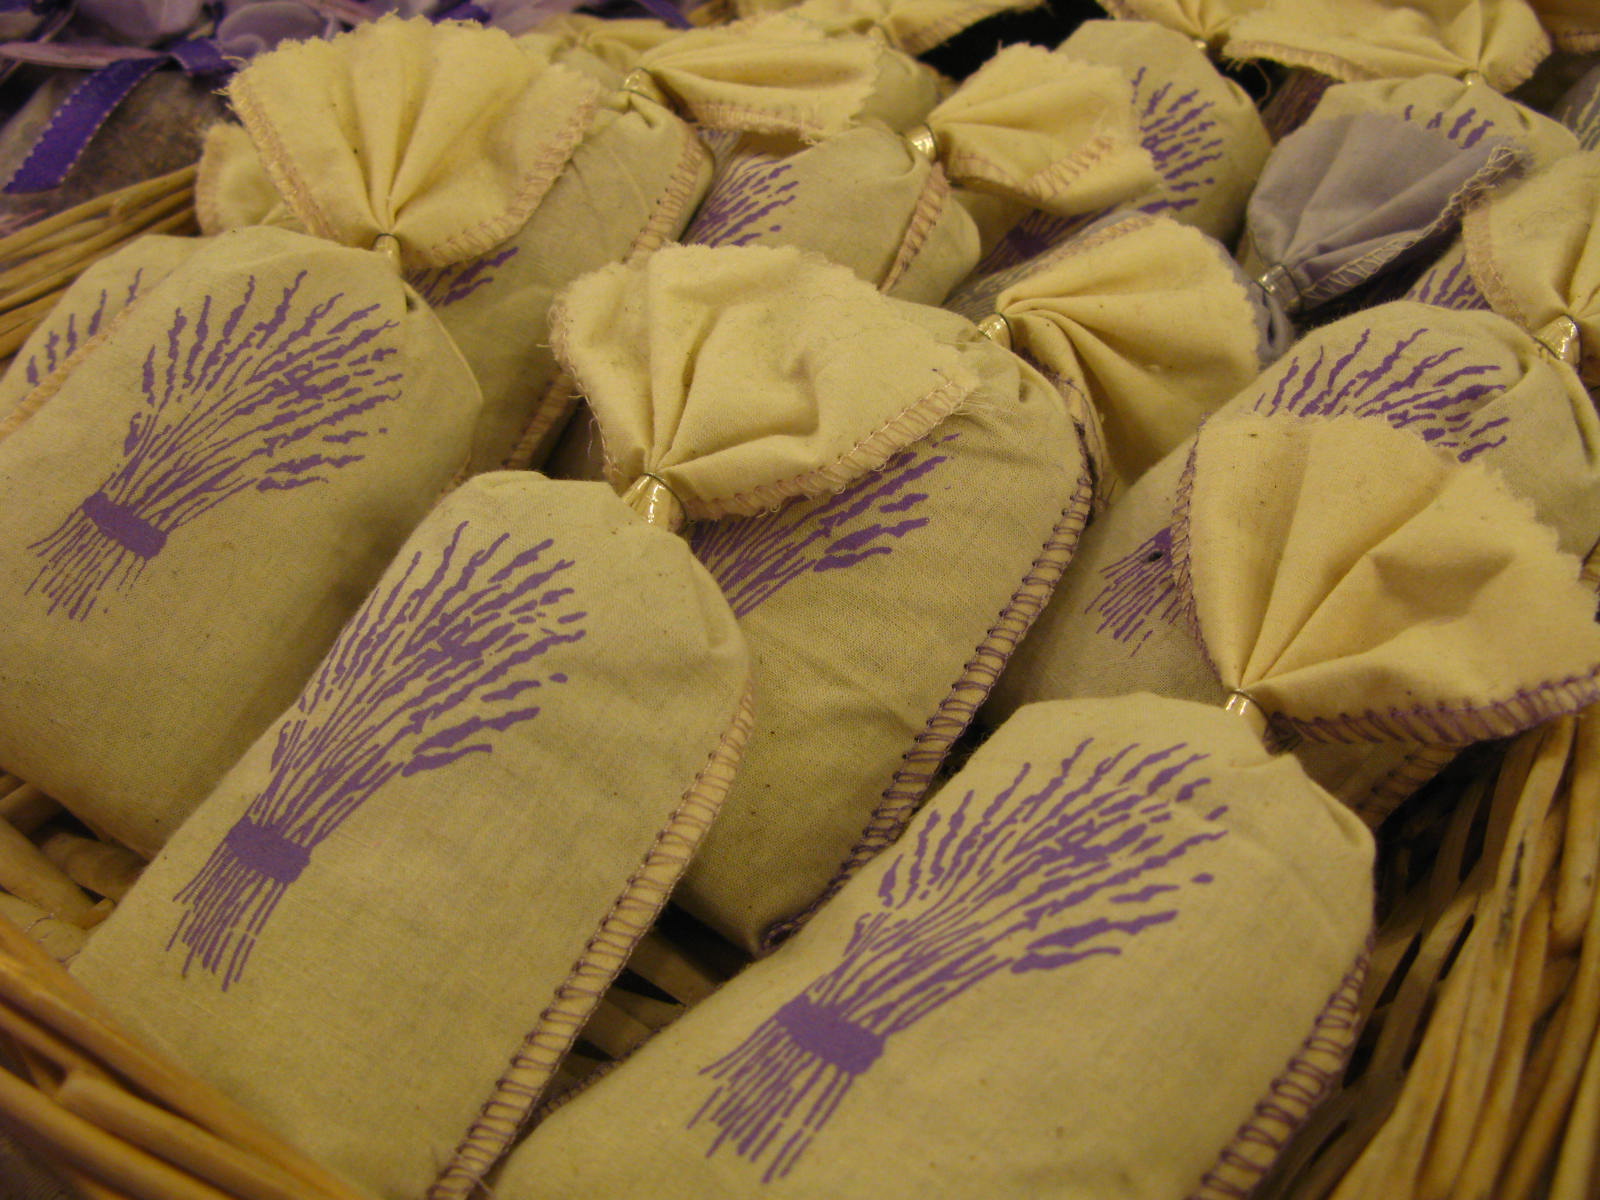 Nơi bán sỉ hoa Lavender Provence ở TP.HCM